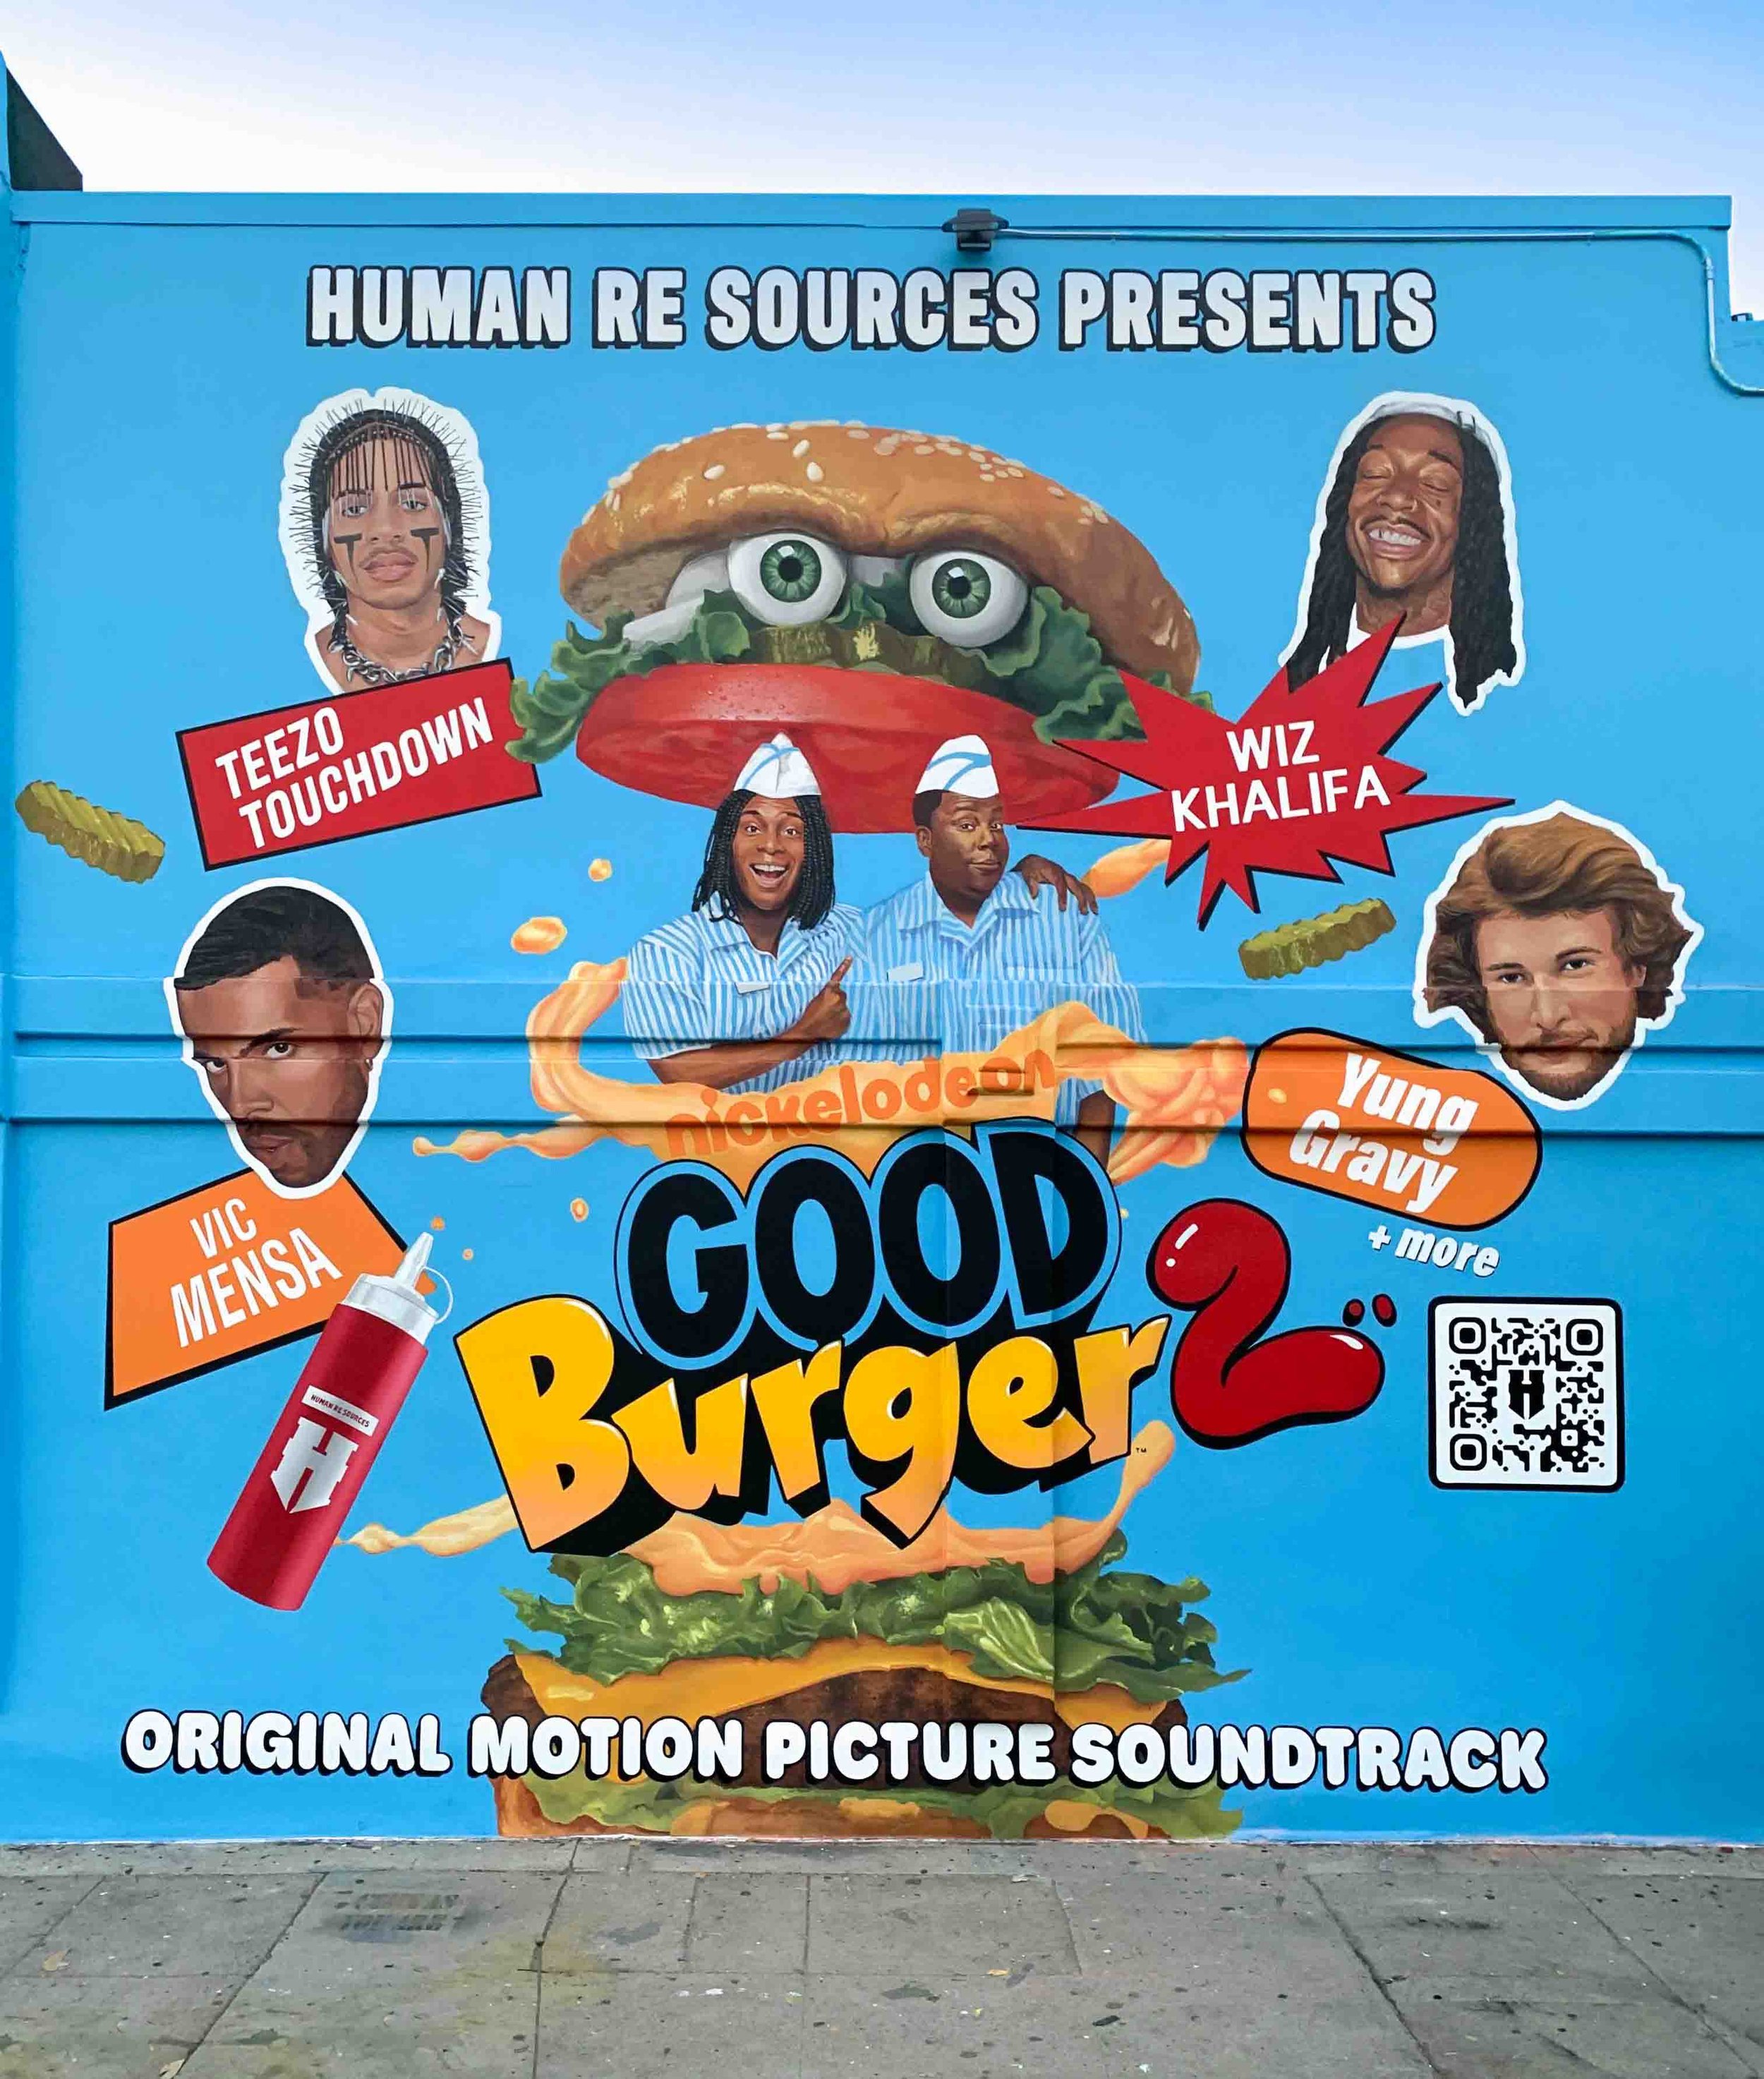 MILK-BURG-Good-Burger-2-hand-painted-advertising-mural-kenan-thompson-kel-mitchell-teezo-touchdown-vic-mensa-wiz-khalifa-yung-gravy.jpg